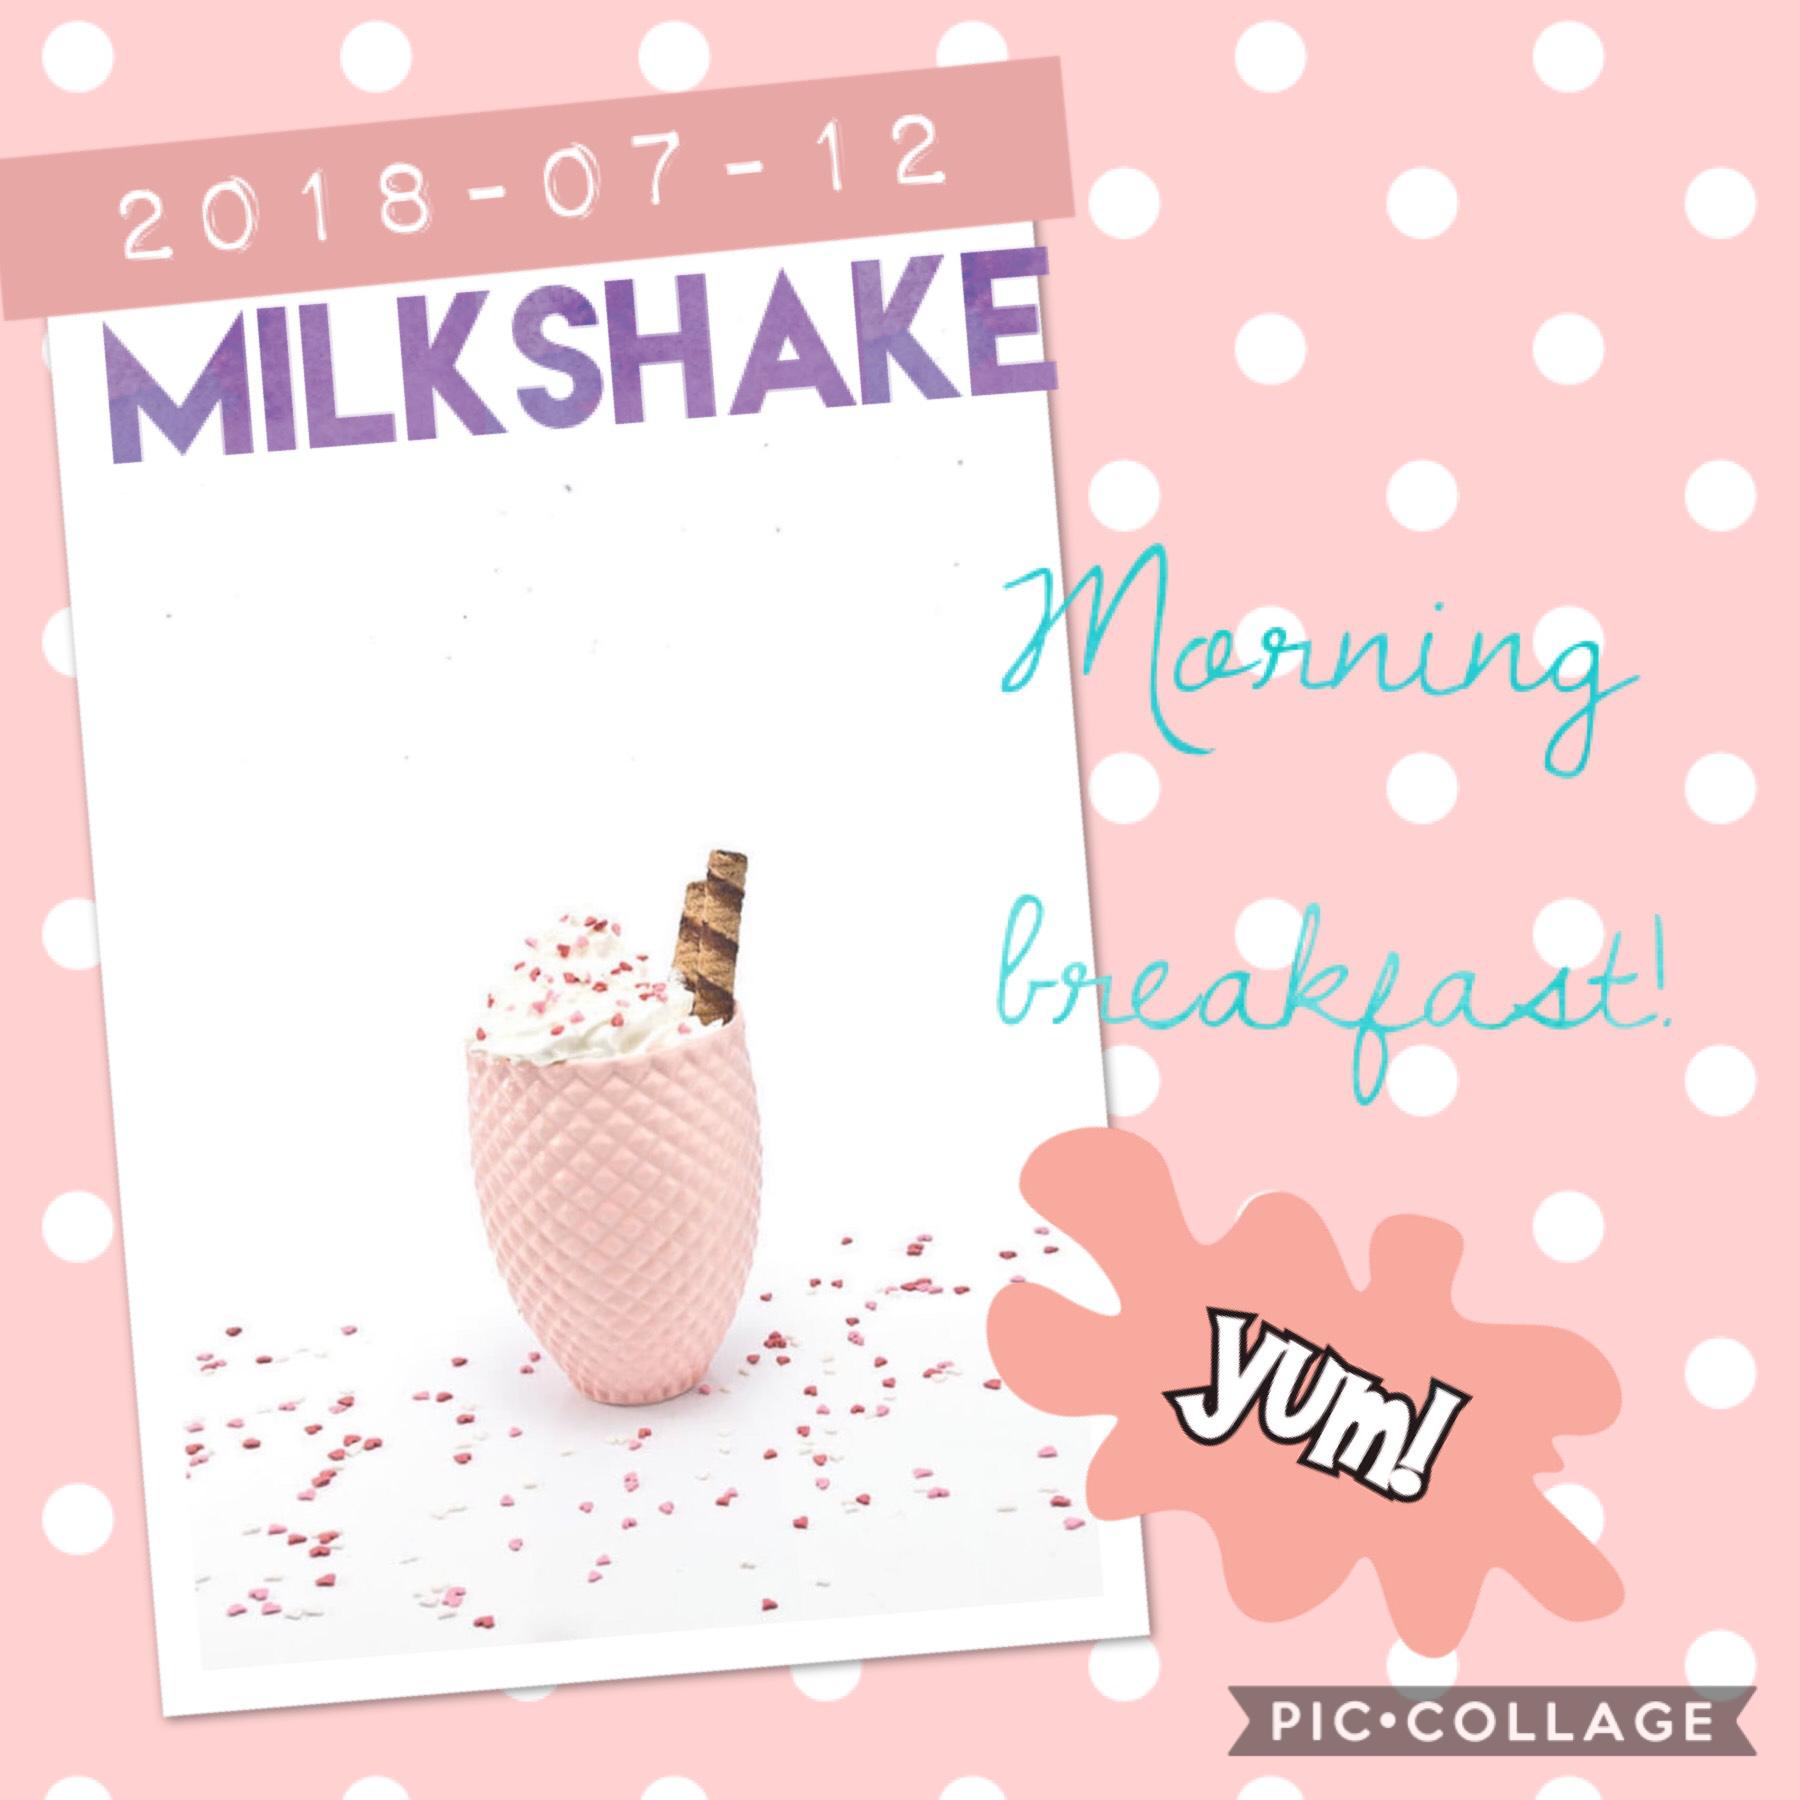 Morning breakfast 
#milkshake #yum #morning #breakfast #pink #2018 #12 #7